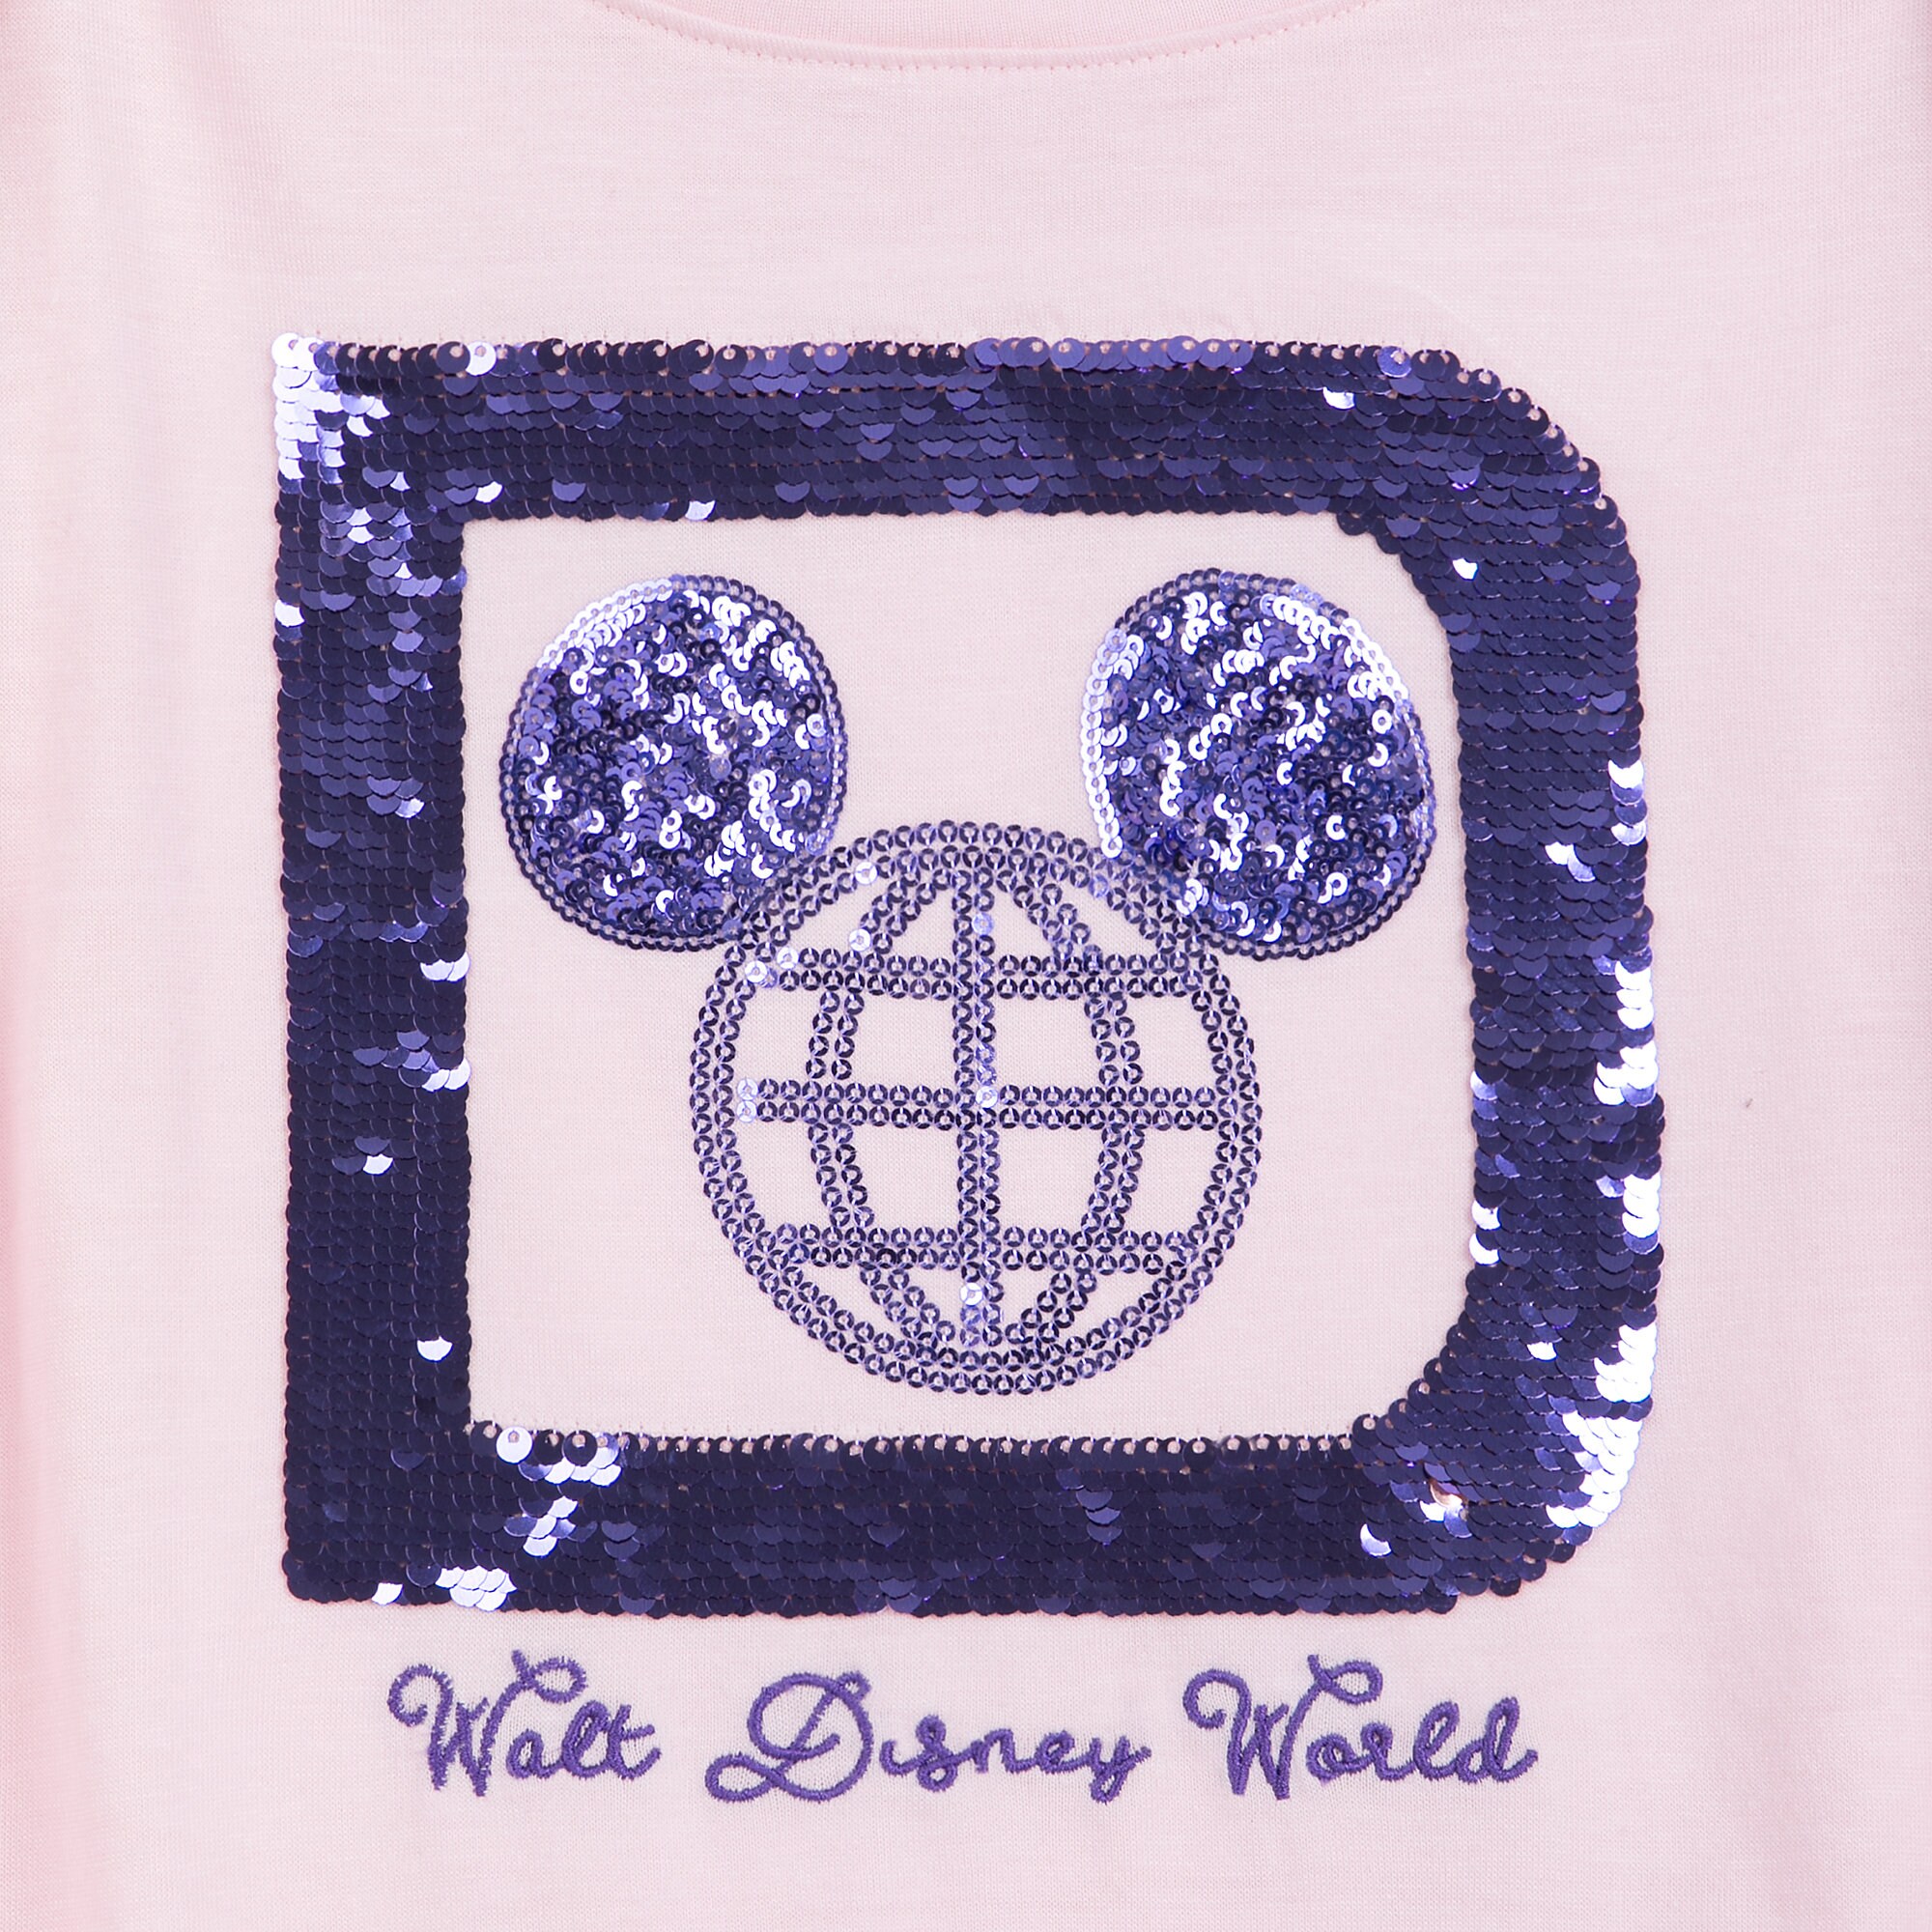 Walt Disney World Reversible Sequin T-Shirt for Women